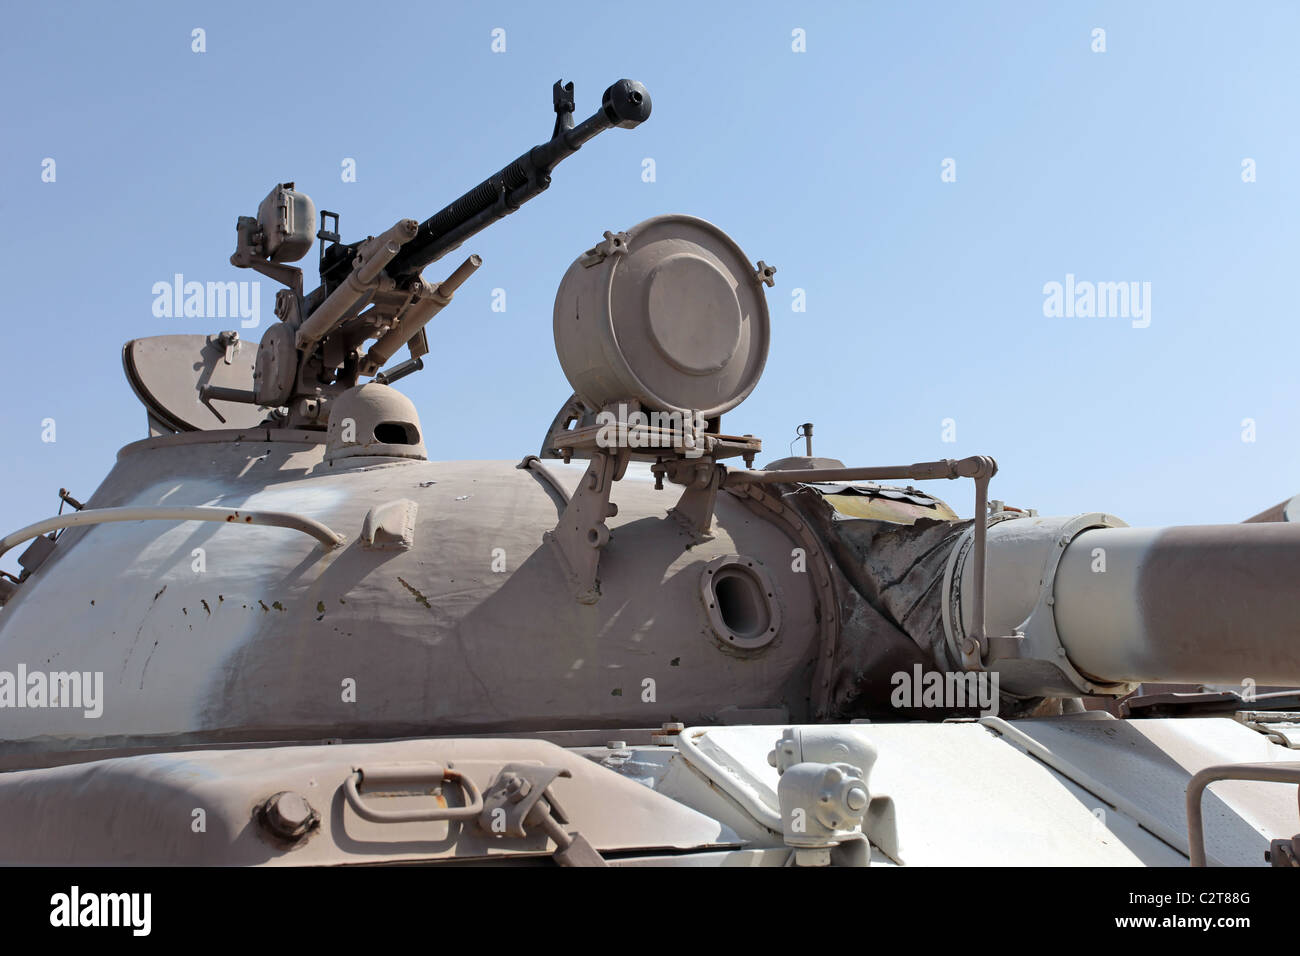 http://c8.alamy.com/comp/C2T88G/soviet-t-62-battle-tank-turret-and-machine-gun-advanced-weapon-deployed-C2T88G.jpg